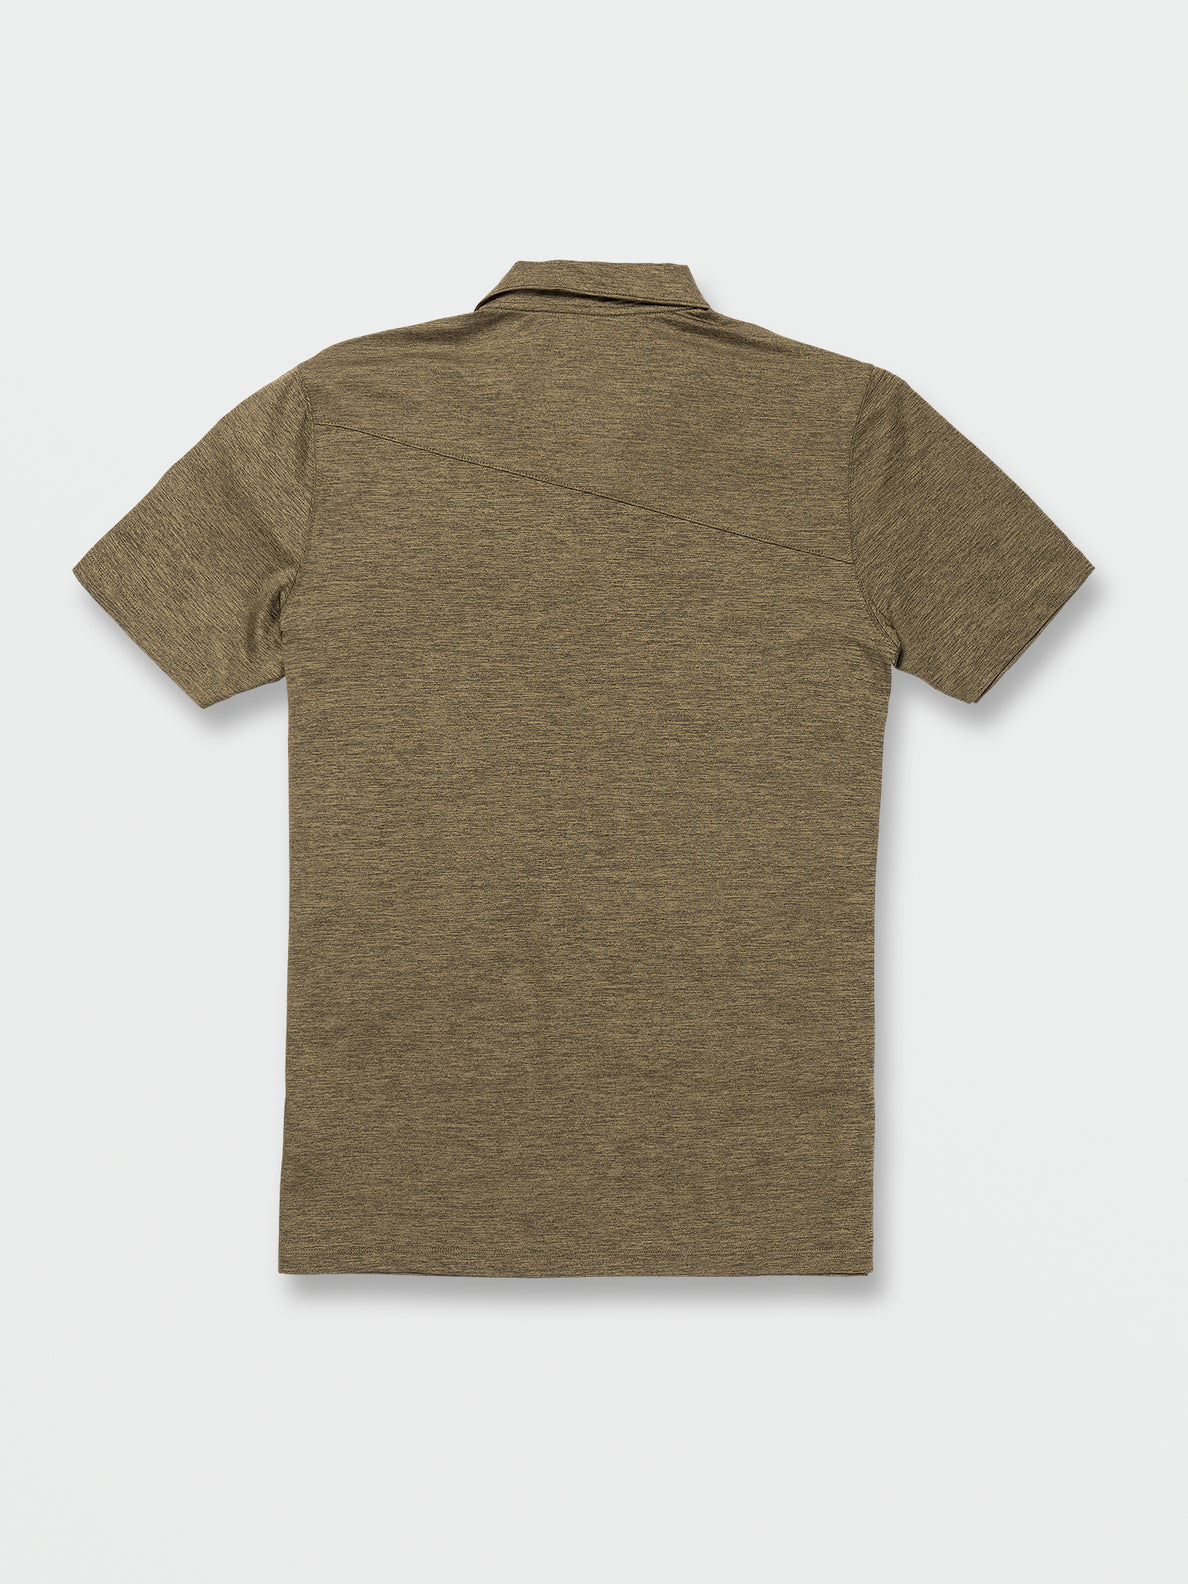 Hazard Pro Polo Short Sleeve Shirt - Old Mill